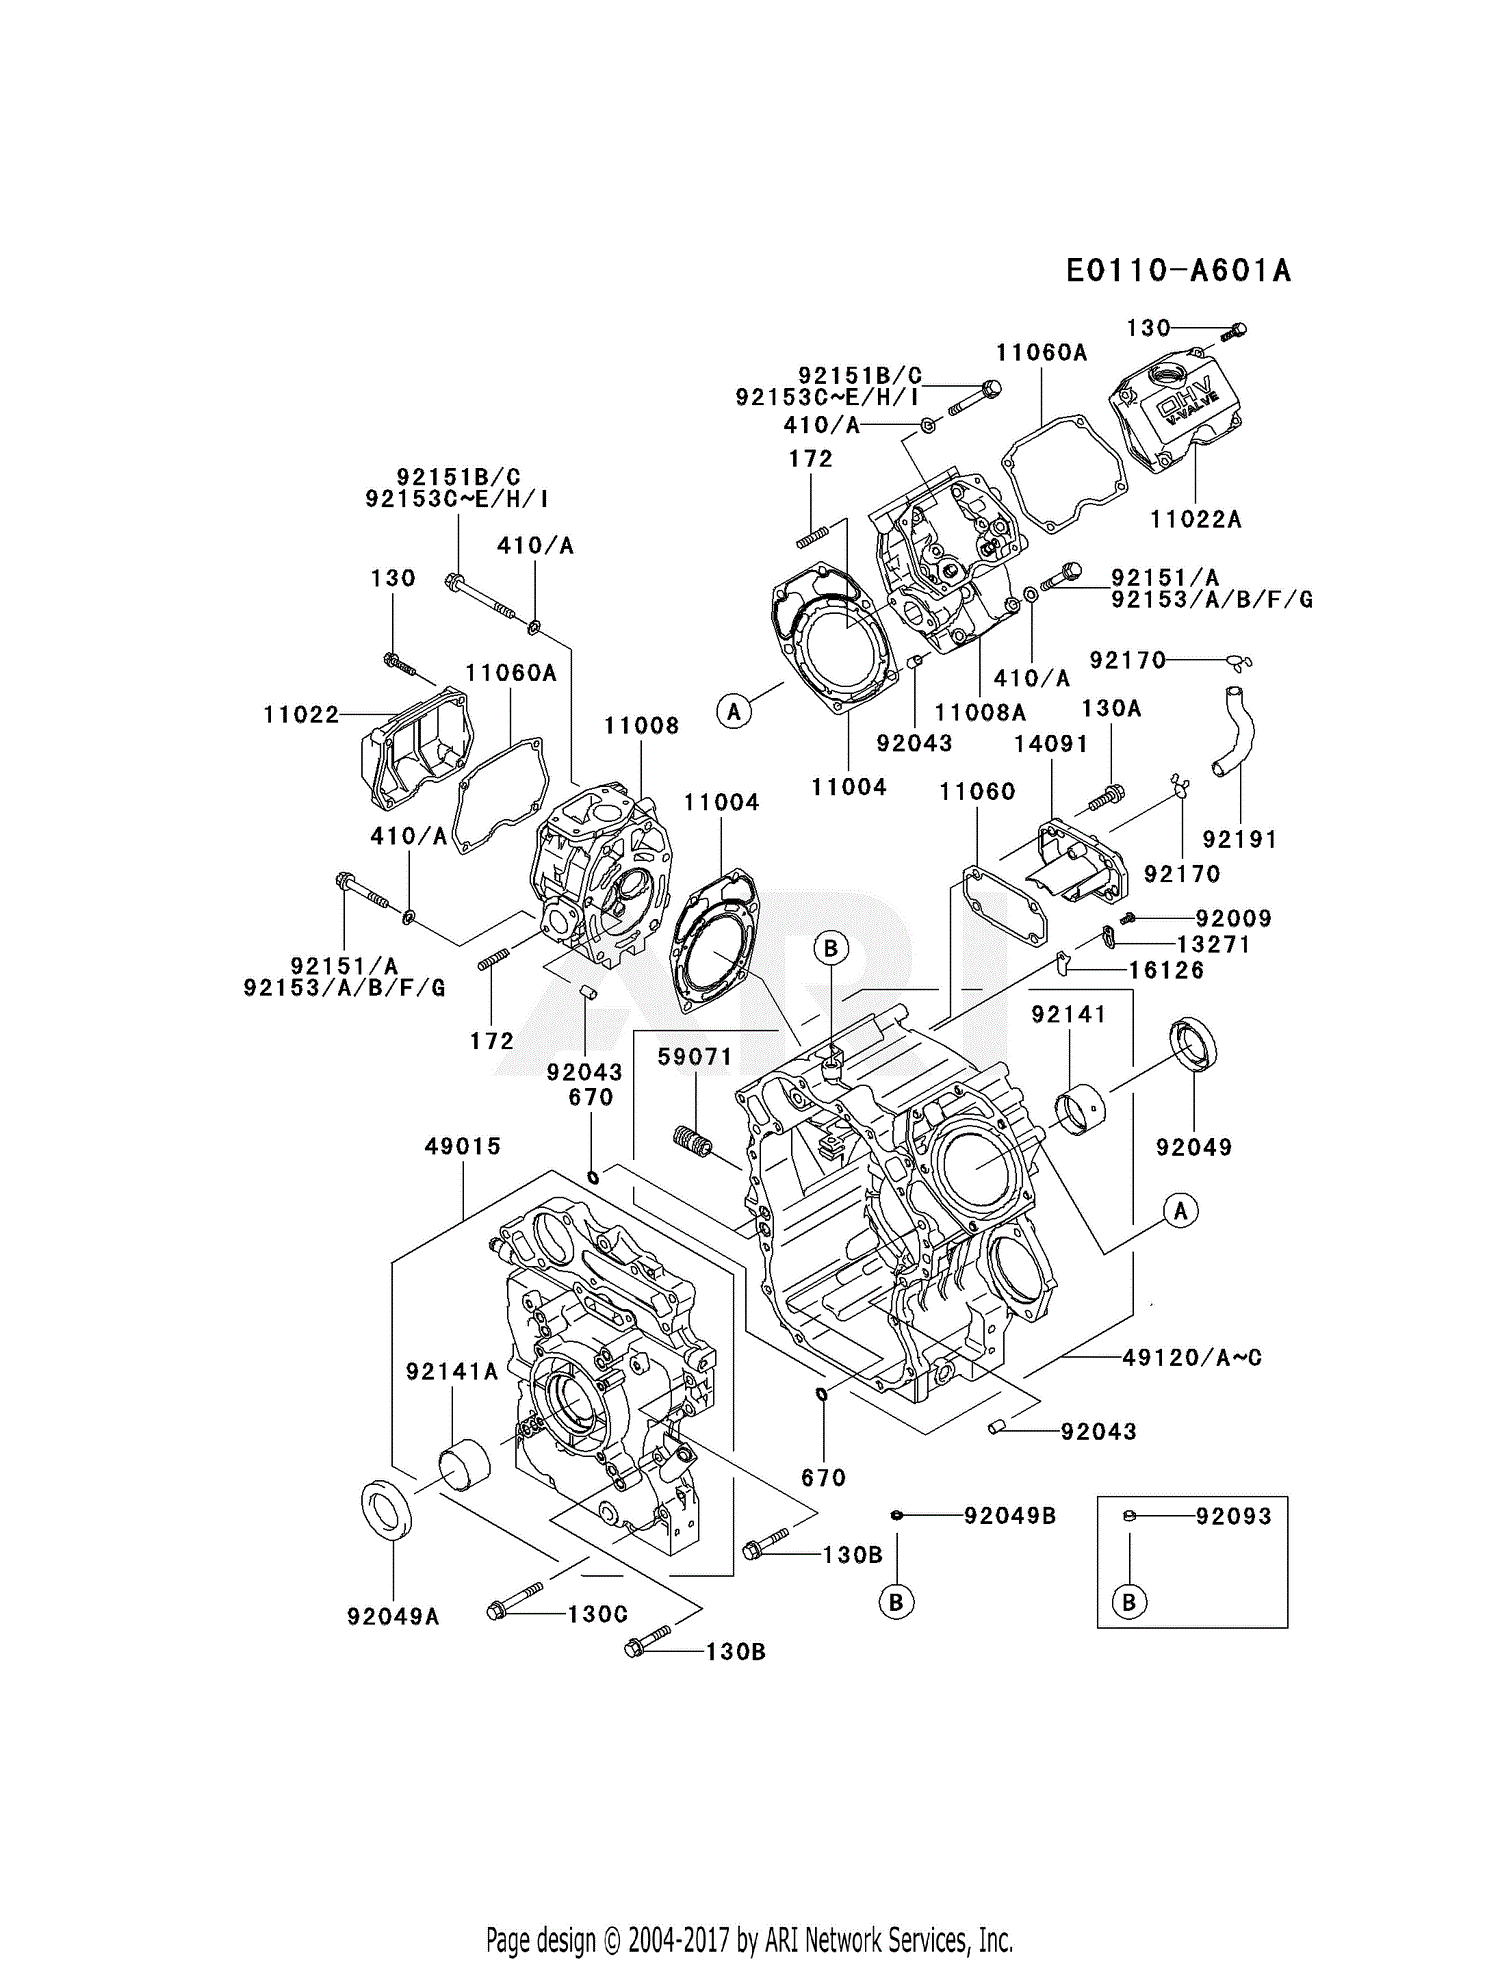 Kawasaki FD750D-AS03 4 Stroke Engine FD750D Parts Diagram ... kawasaki engine parts diagrams 